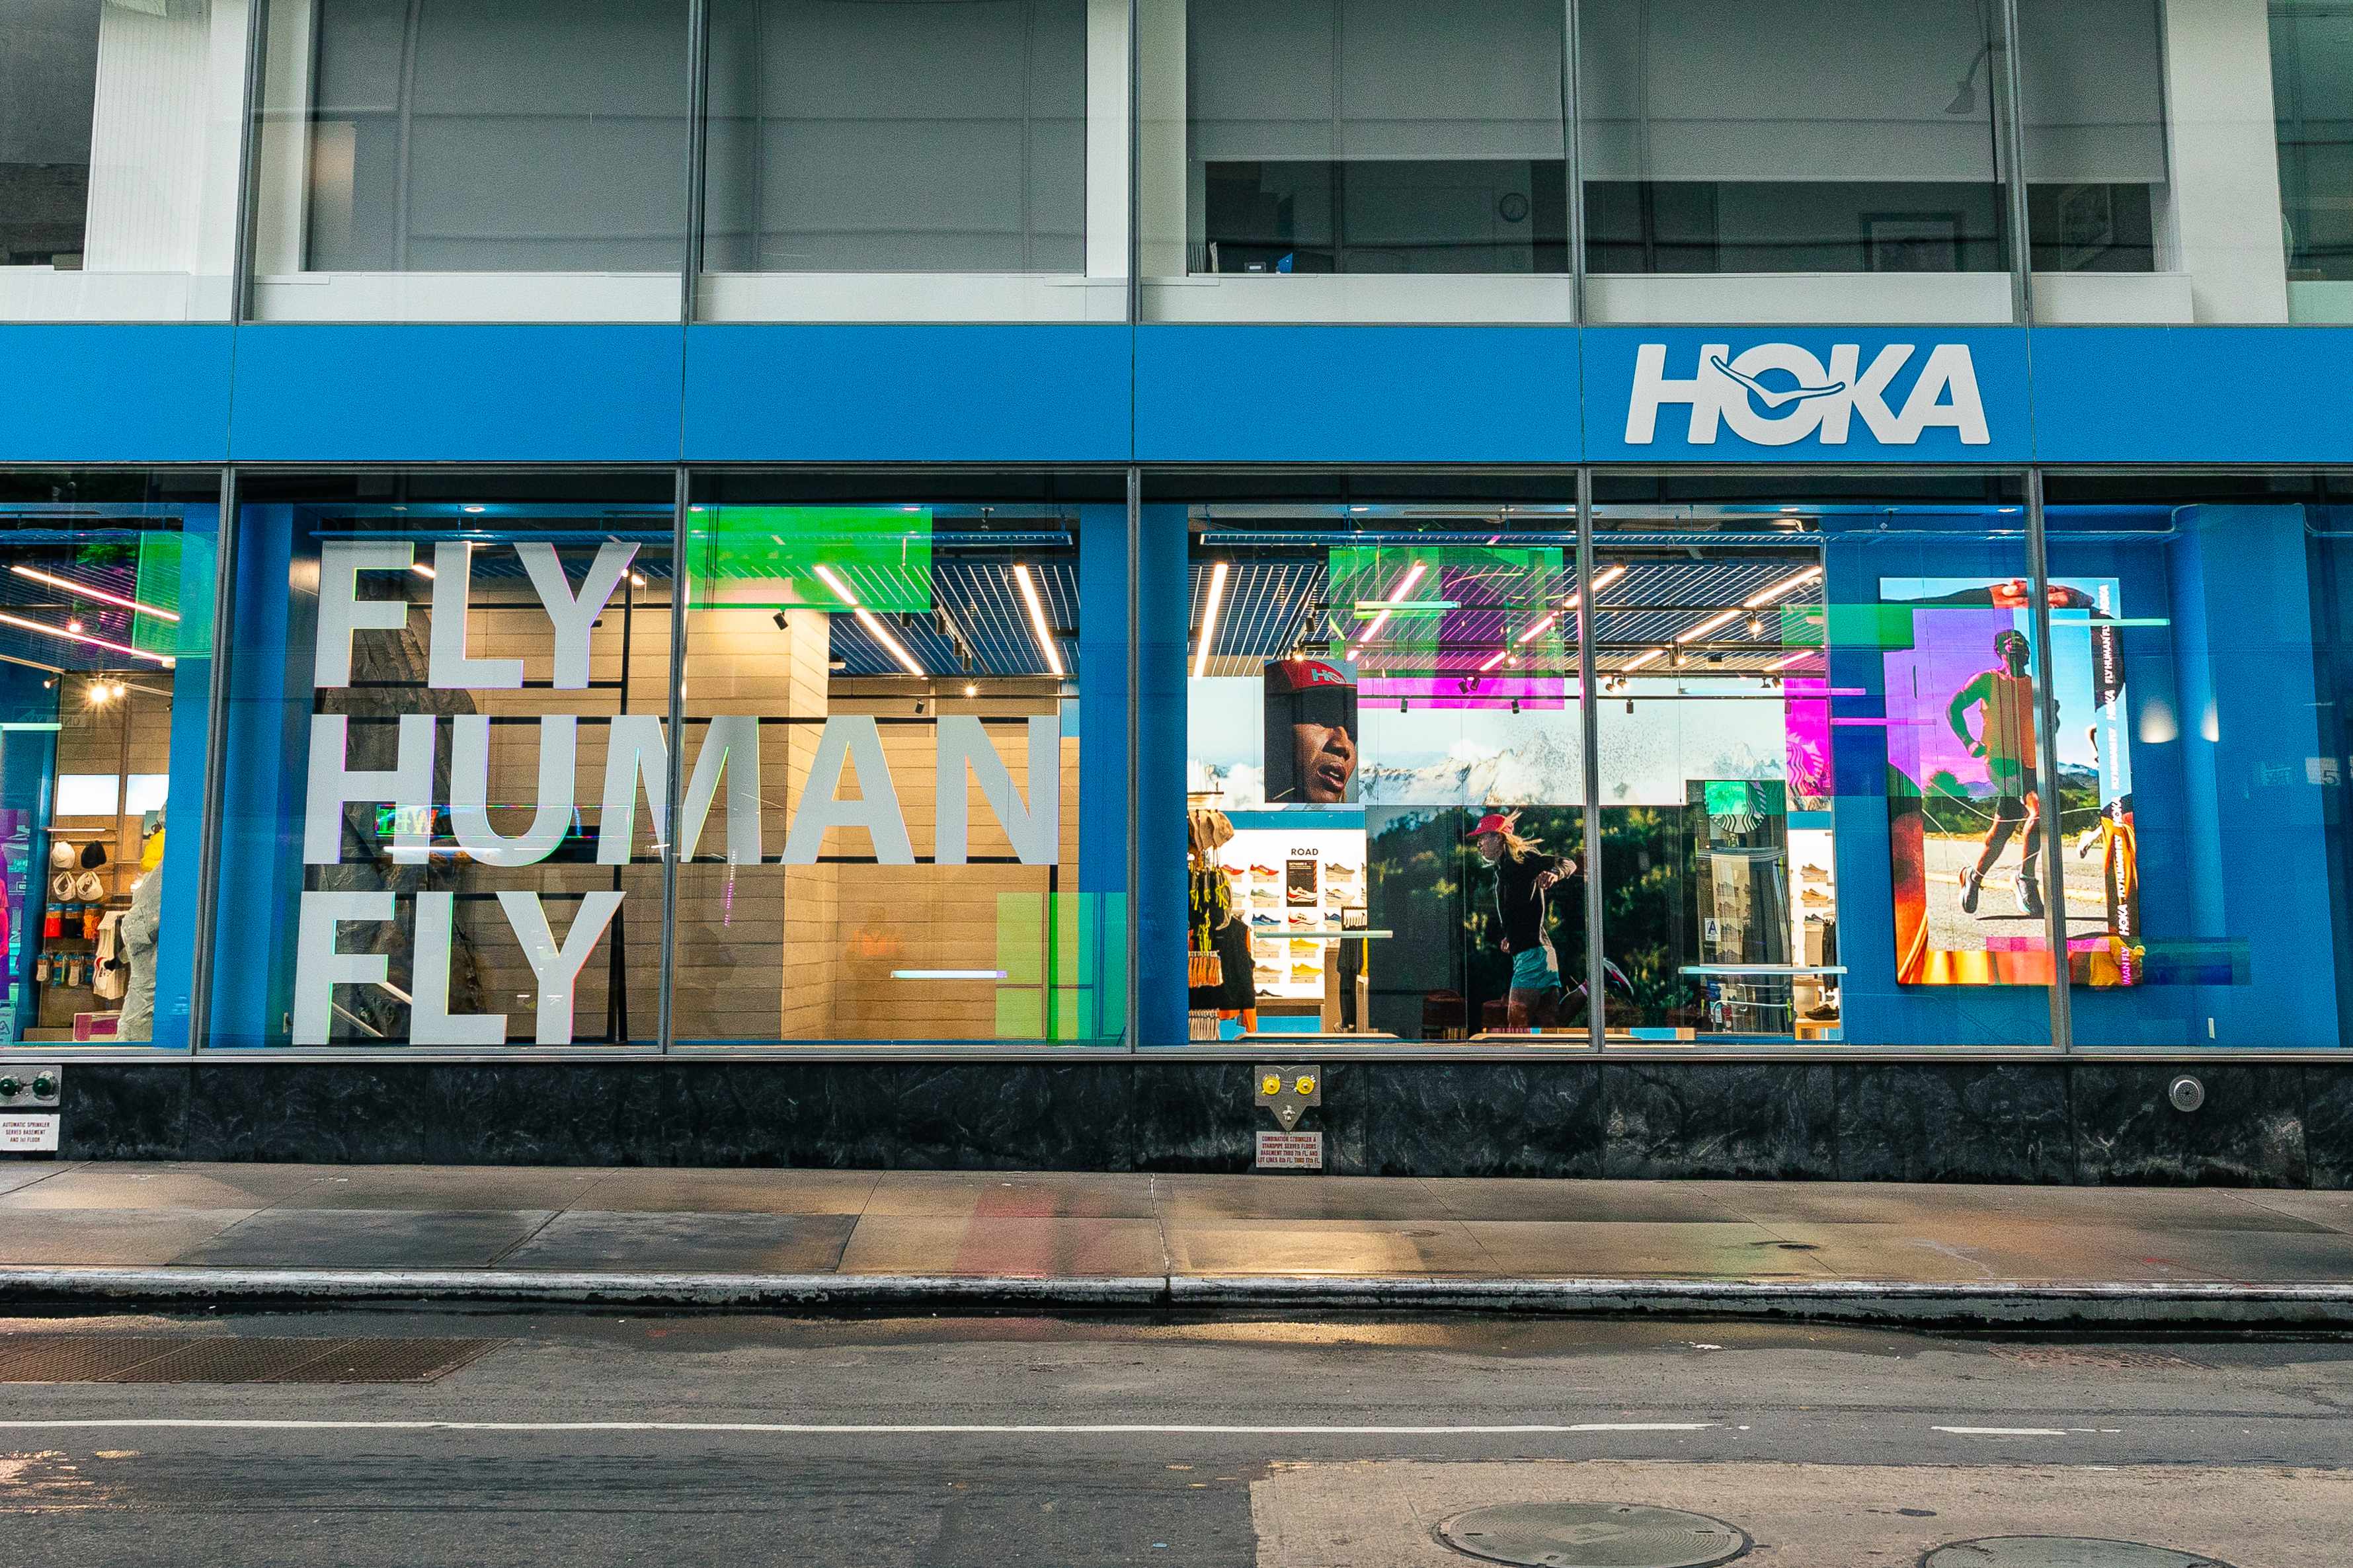 HOKA's New York flagship store